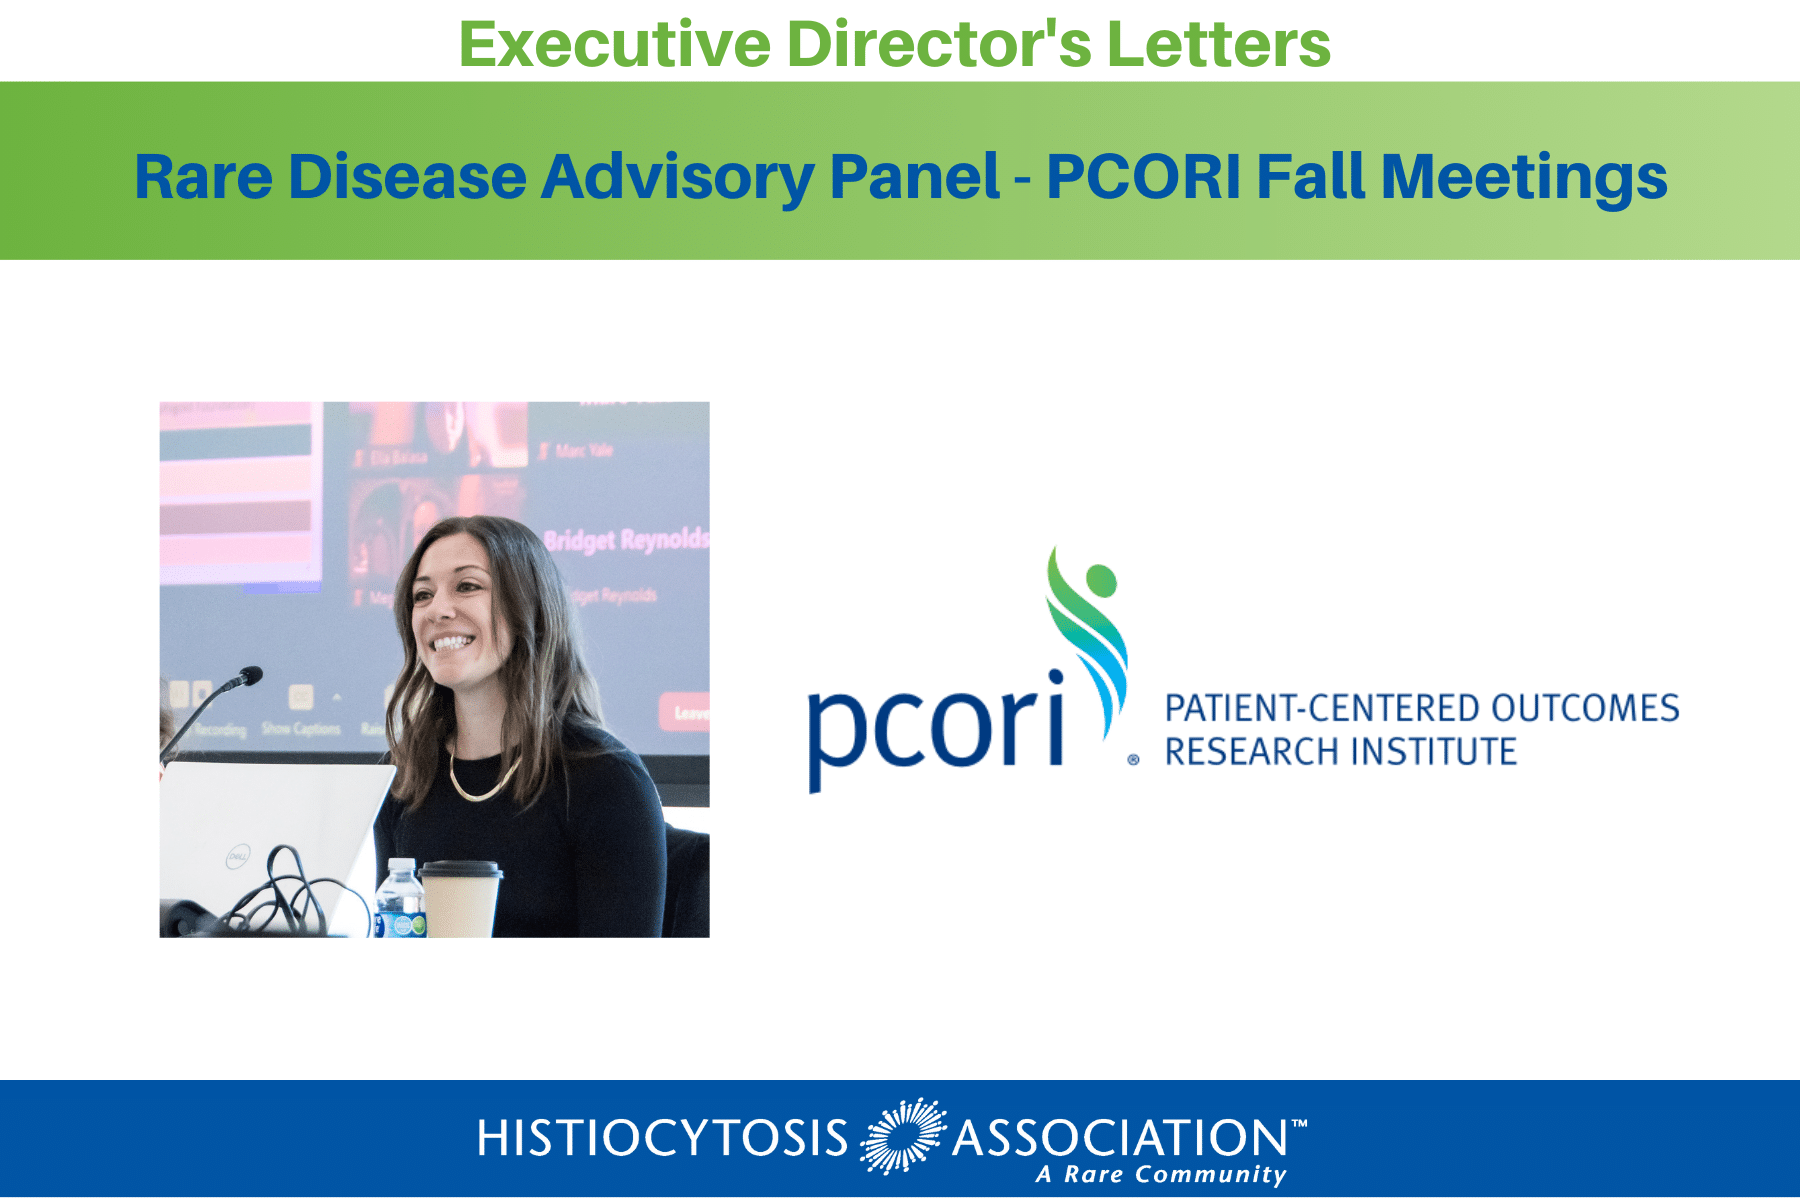 Deanna pictured at PCORI Rare Disease Advisory Panel Meeting